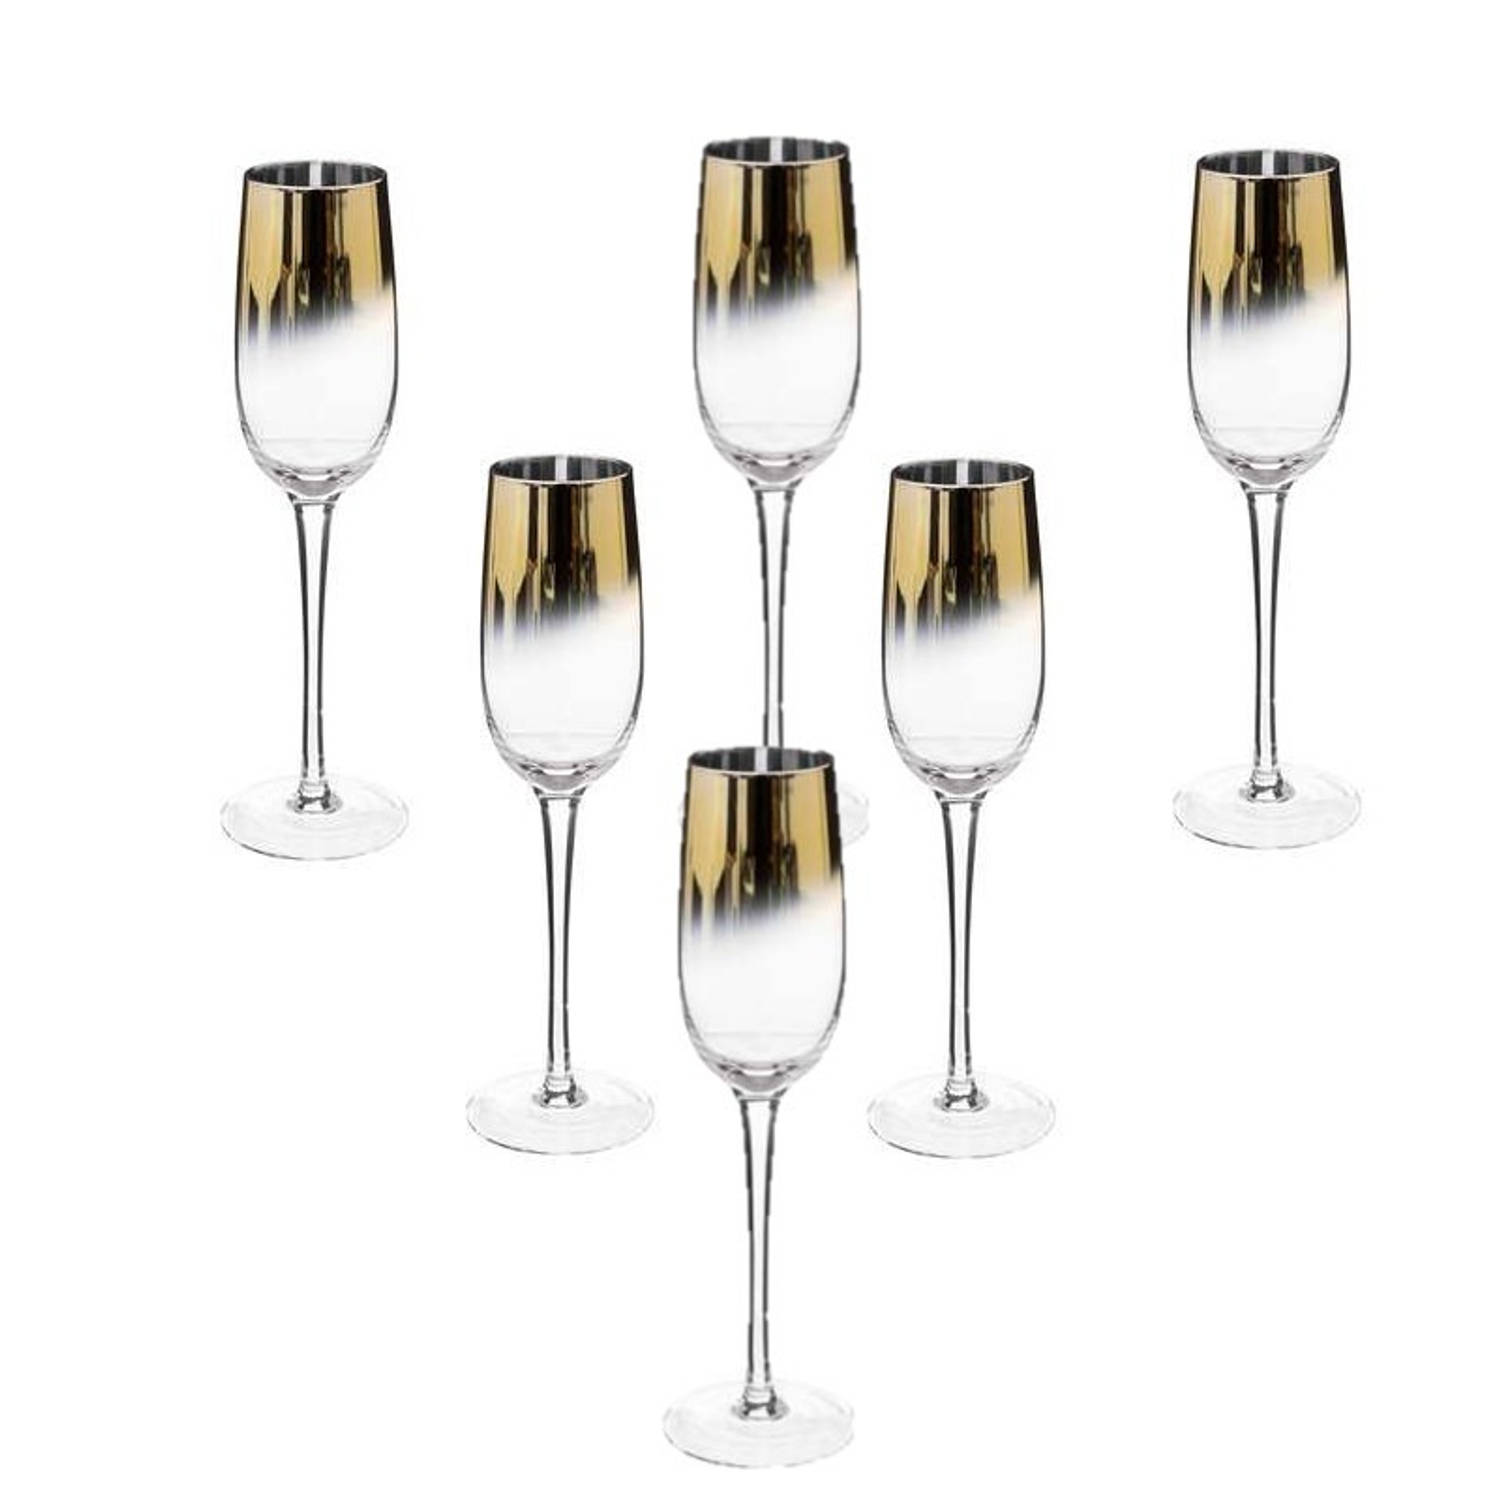 Set van 6x champagneglazen/flutes gouden rand 210 ml Arya van glas - Champagne glazen